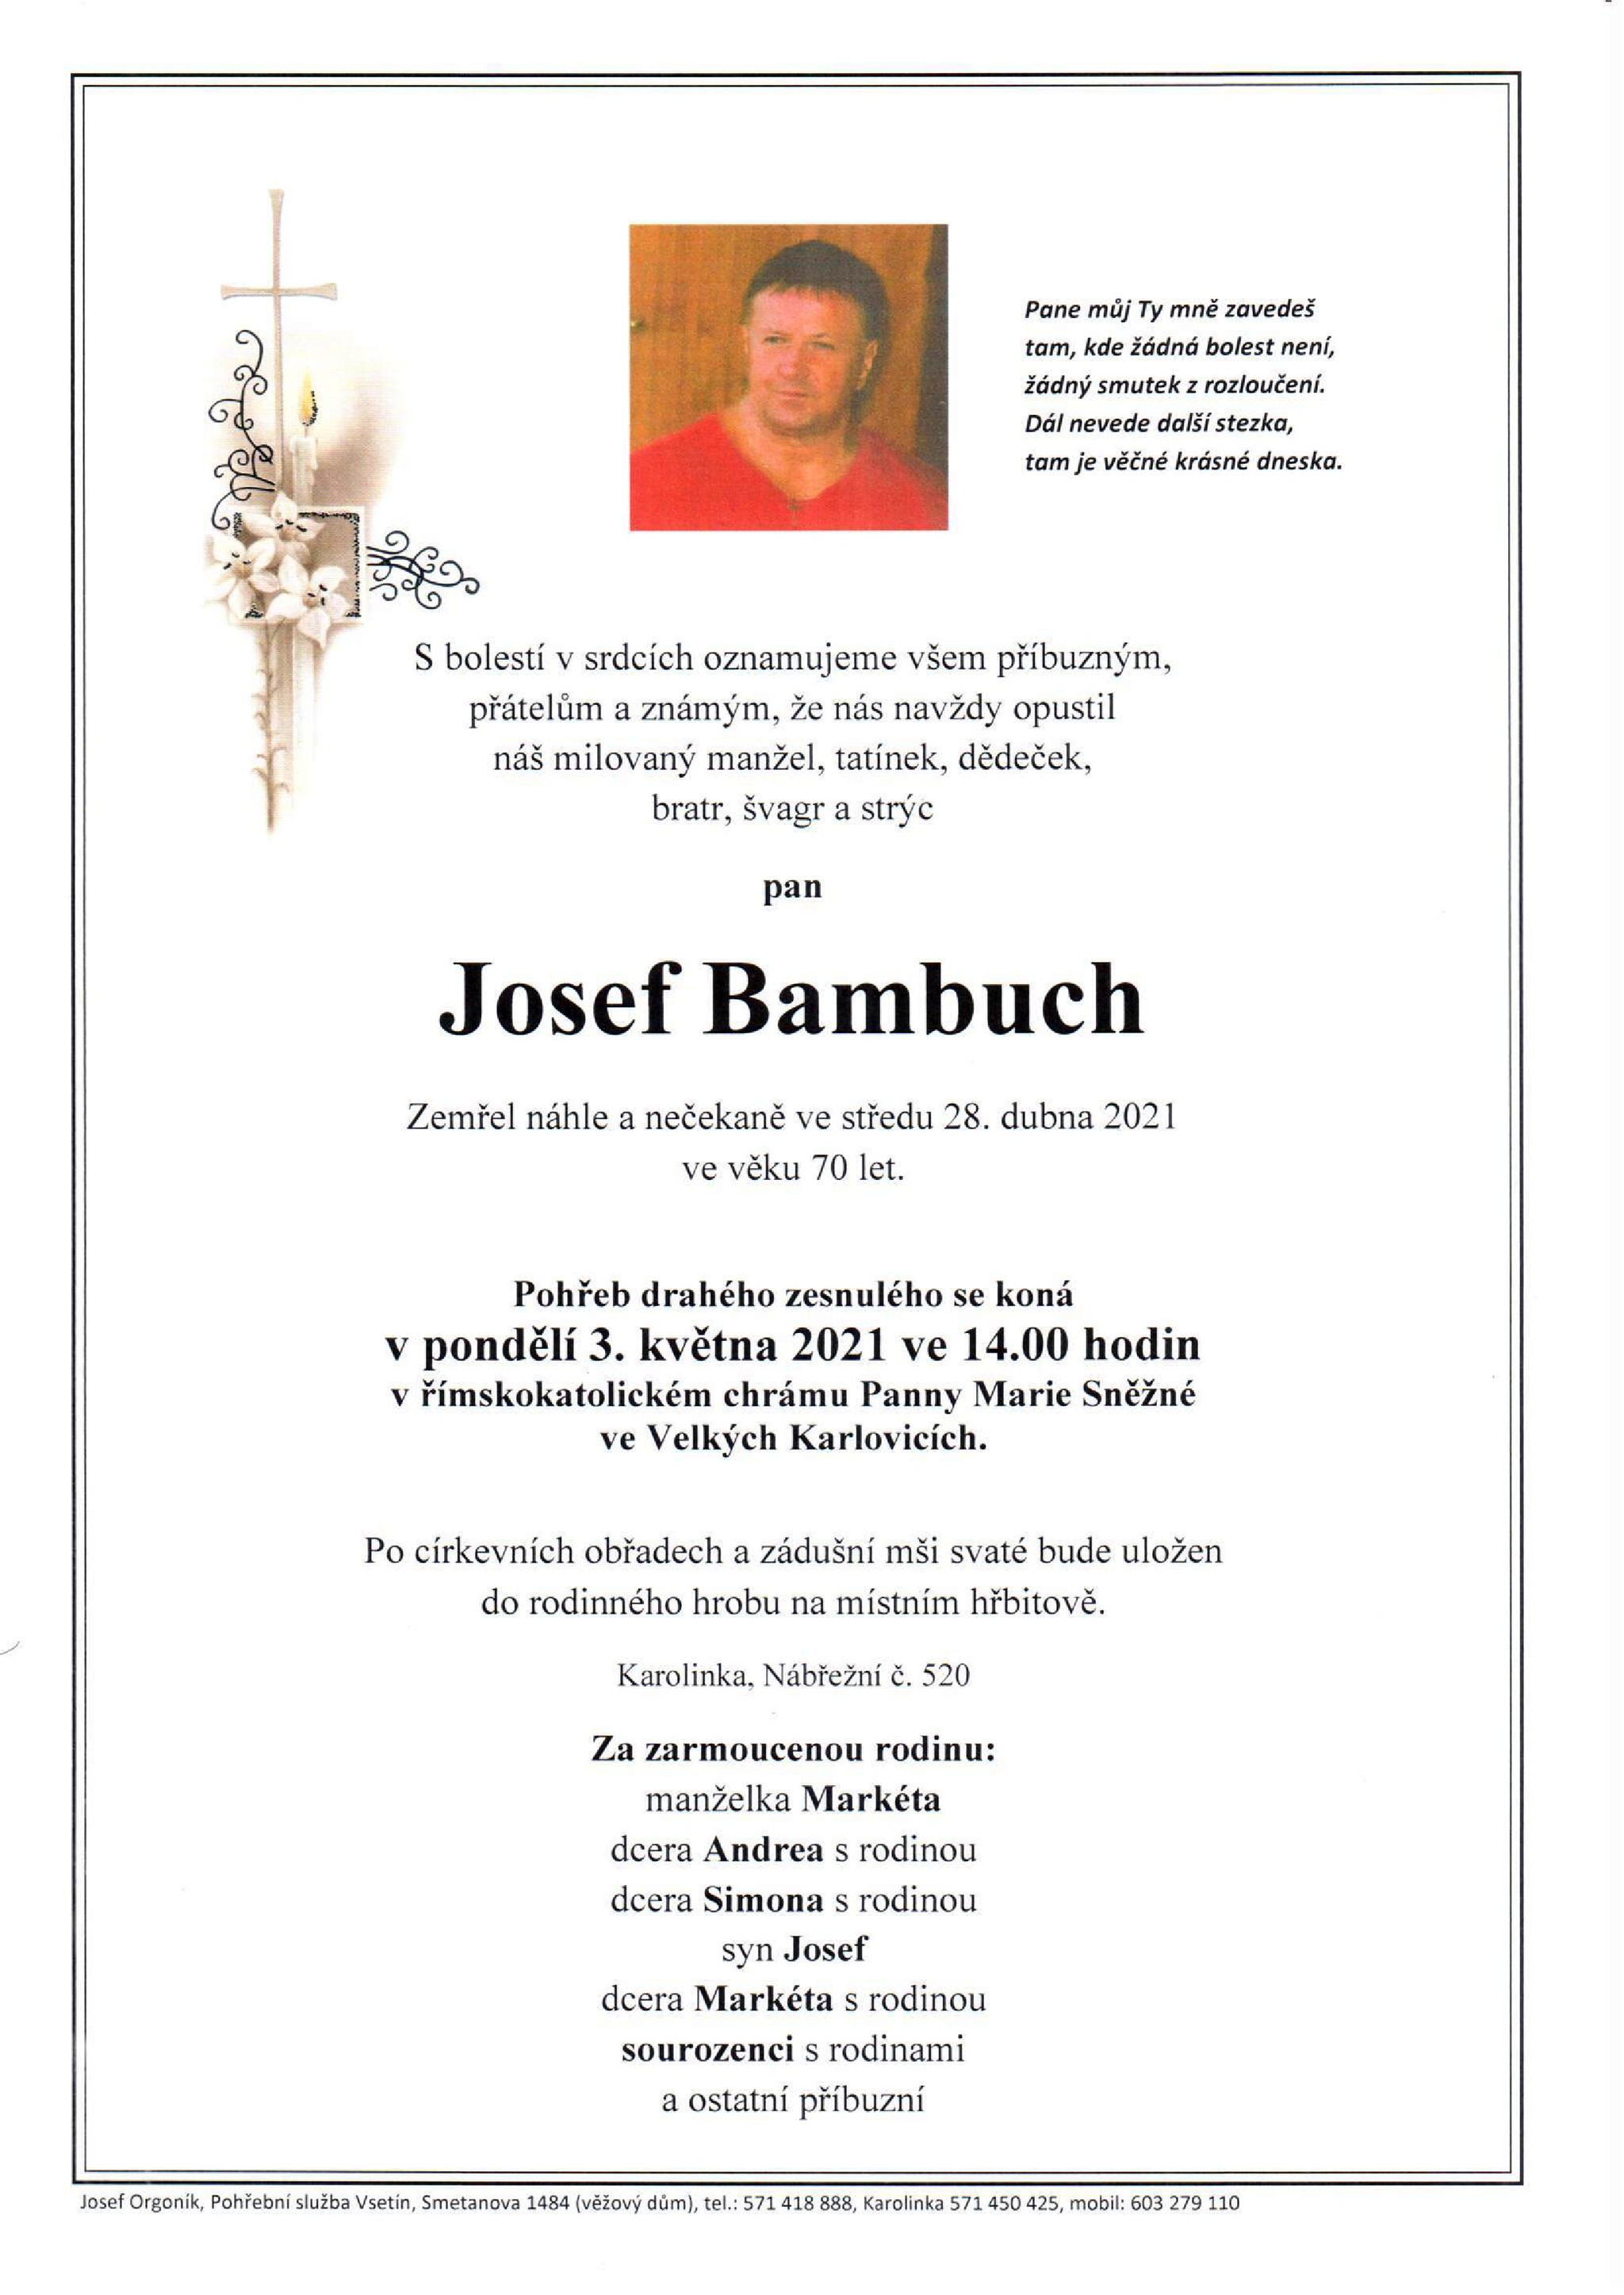 Josef Bambuch